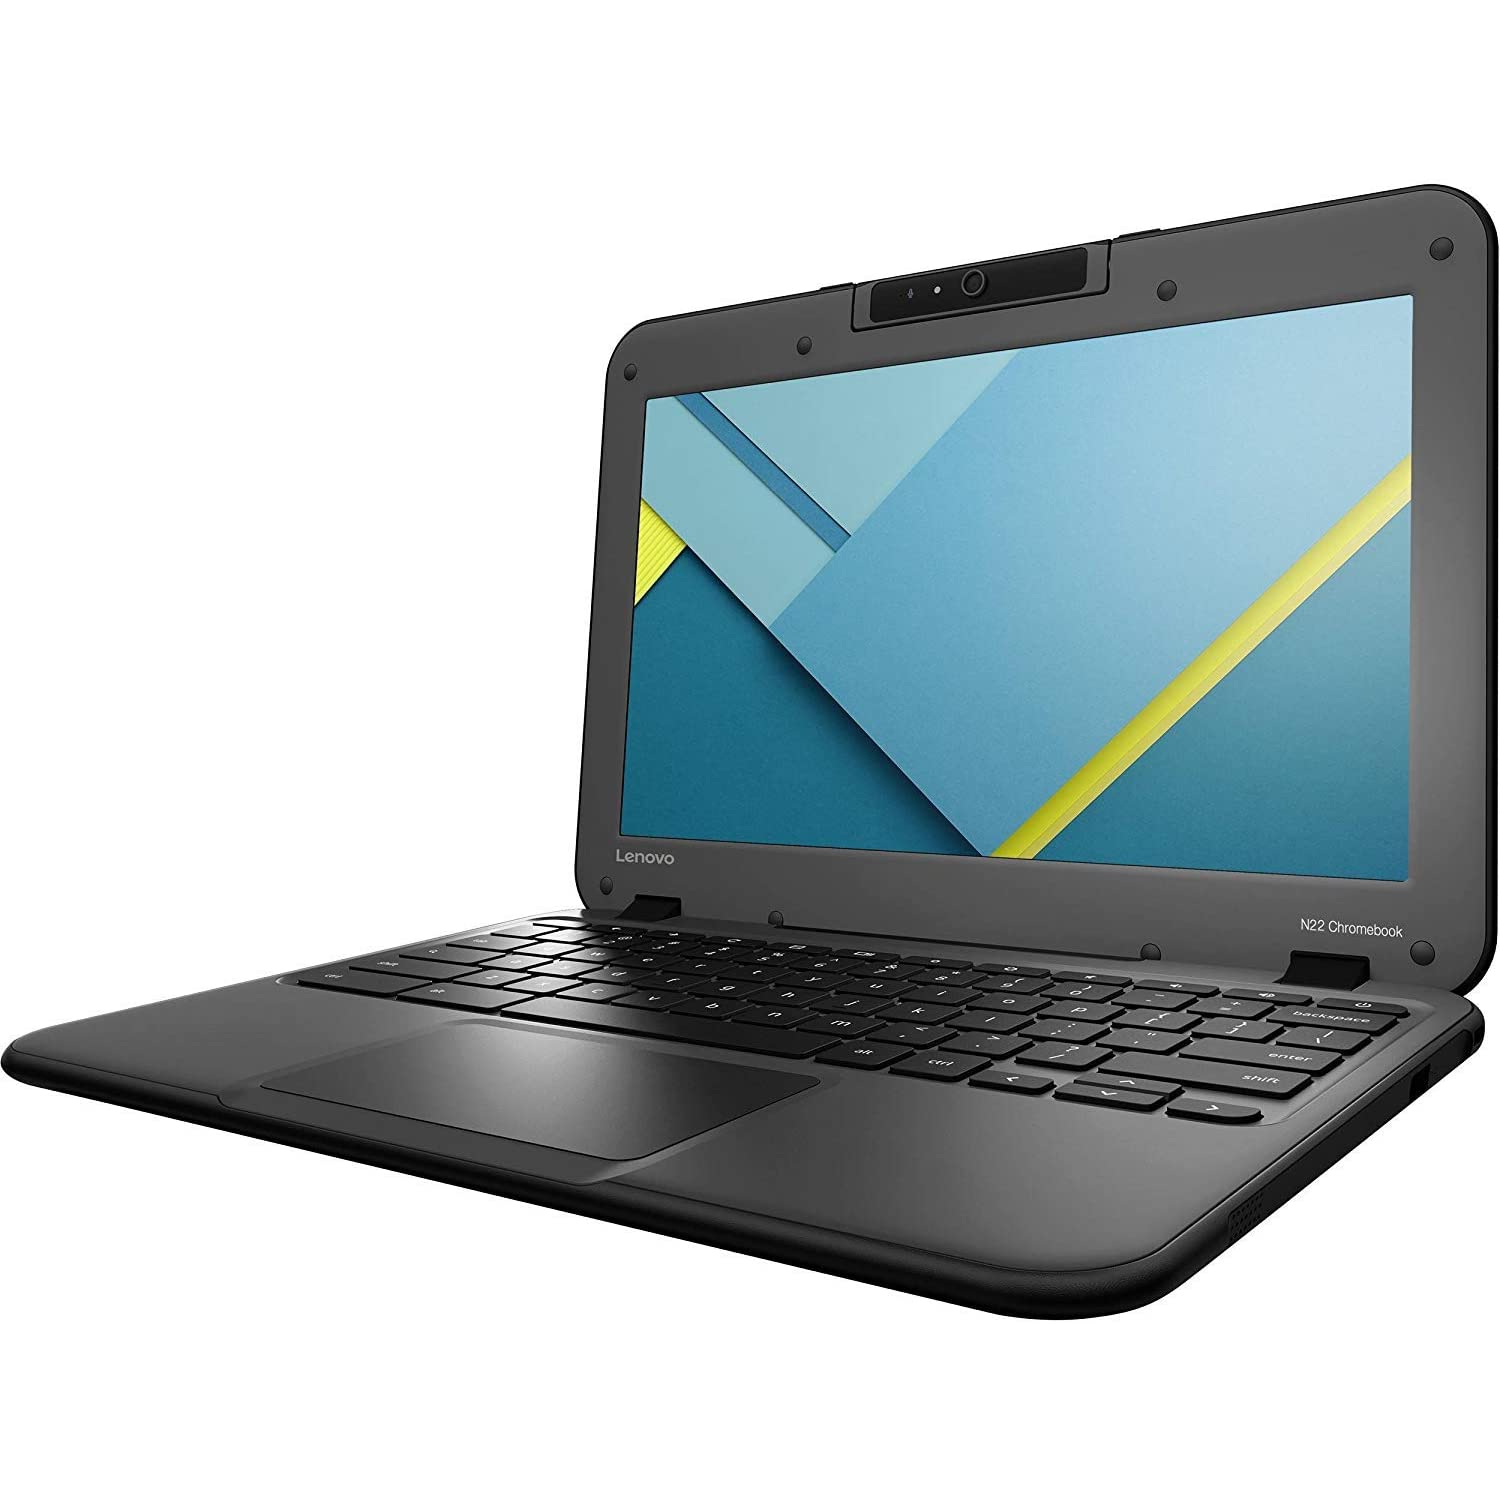 Refurbished (Excellent) - Lenovo Chromebook N22 11.6" (Intel Celeron / 4GB RAM / 16GB SSD) US QWERTY Keyboard